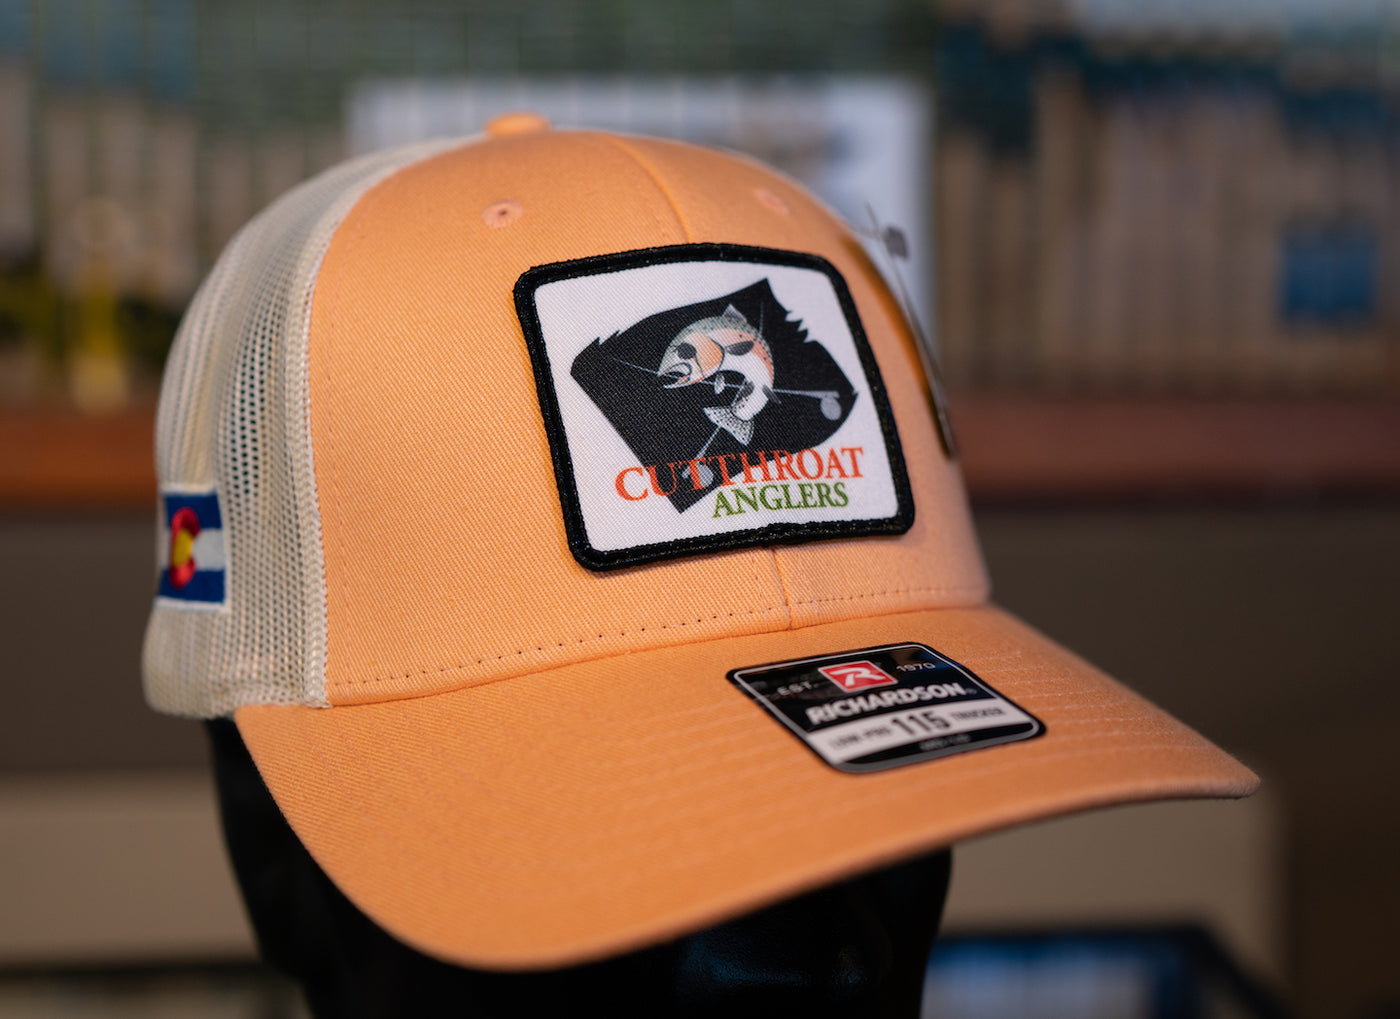 Richardson 115 Cutthroat Anglers Sublimated Logo Hats